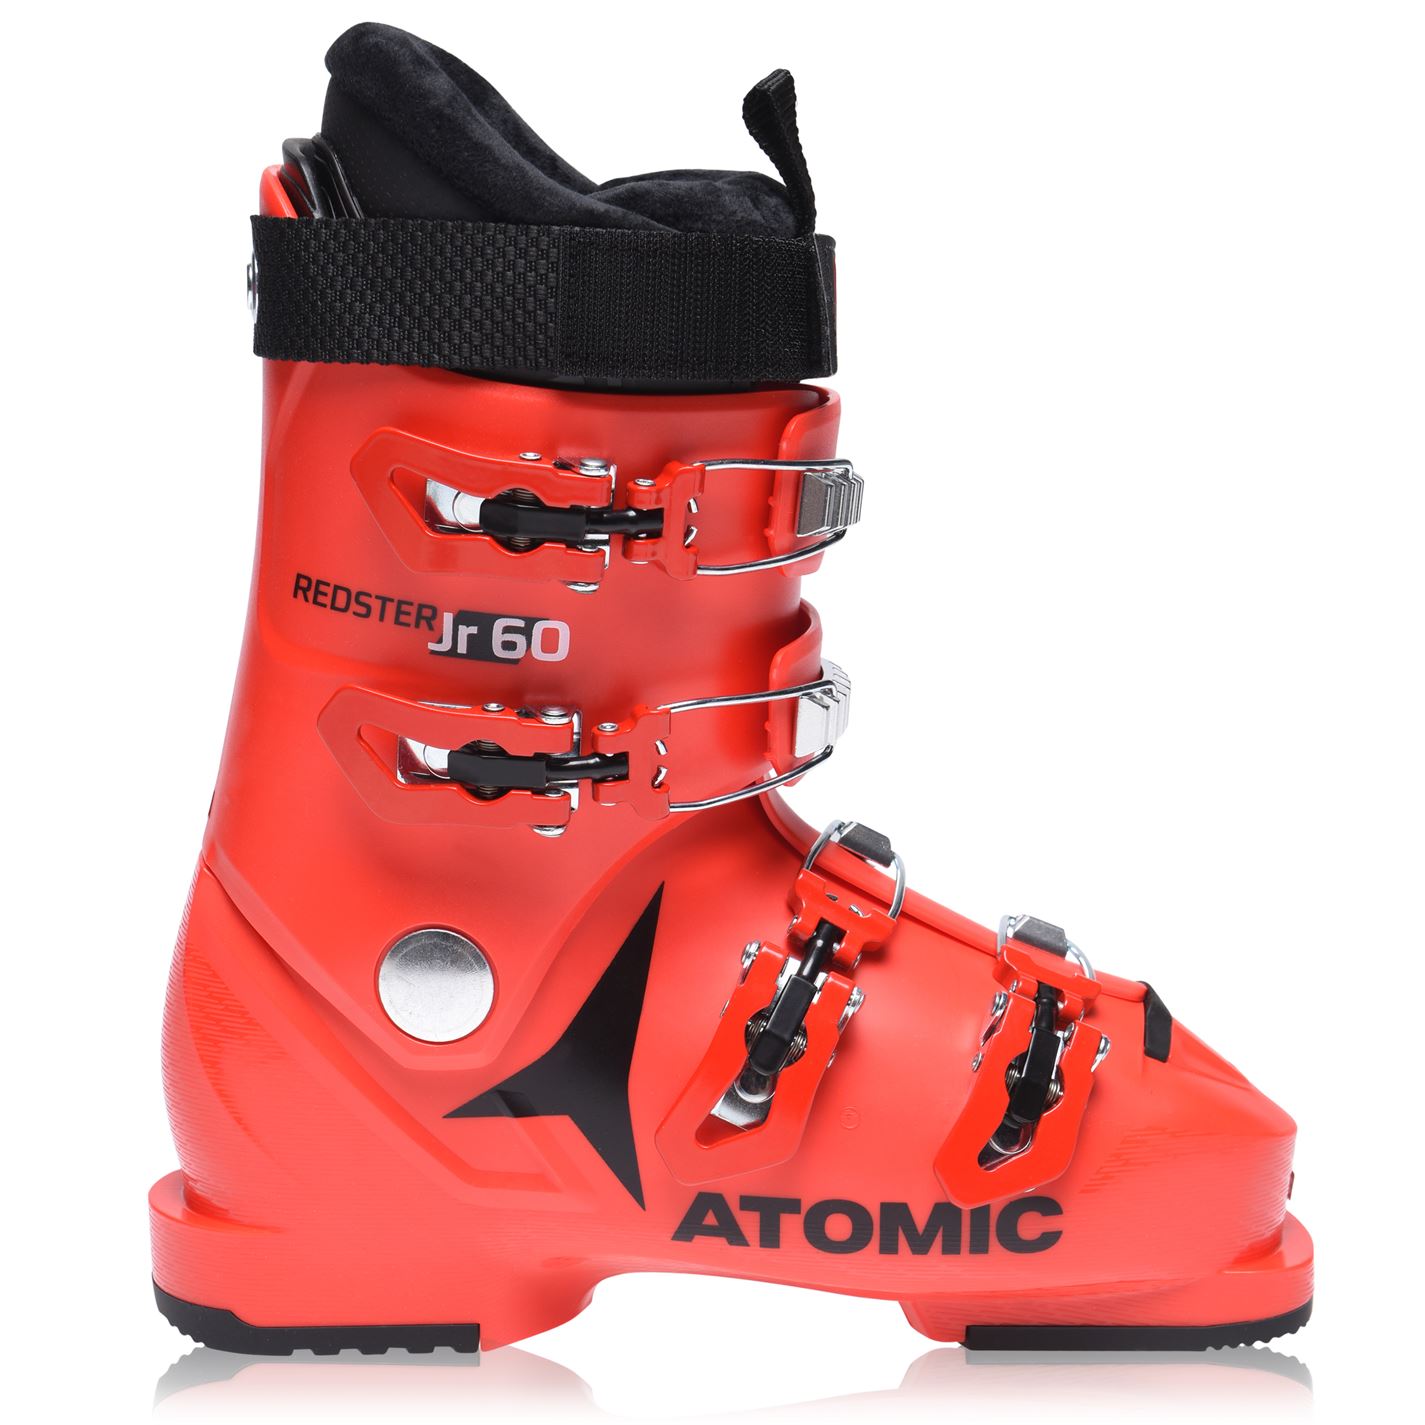 Clapari ski Atomic Redster60 pentru baietei